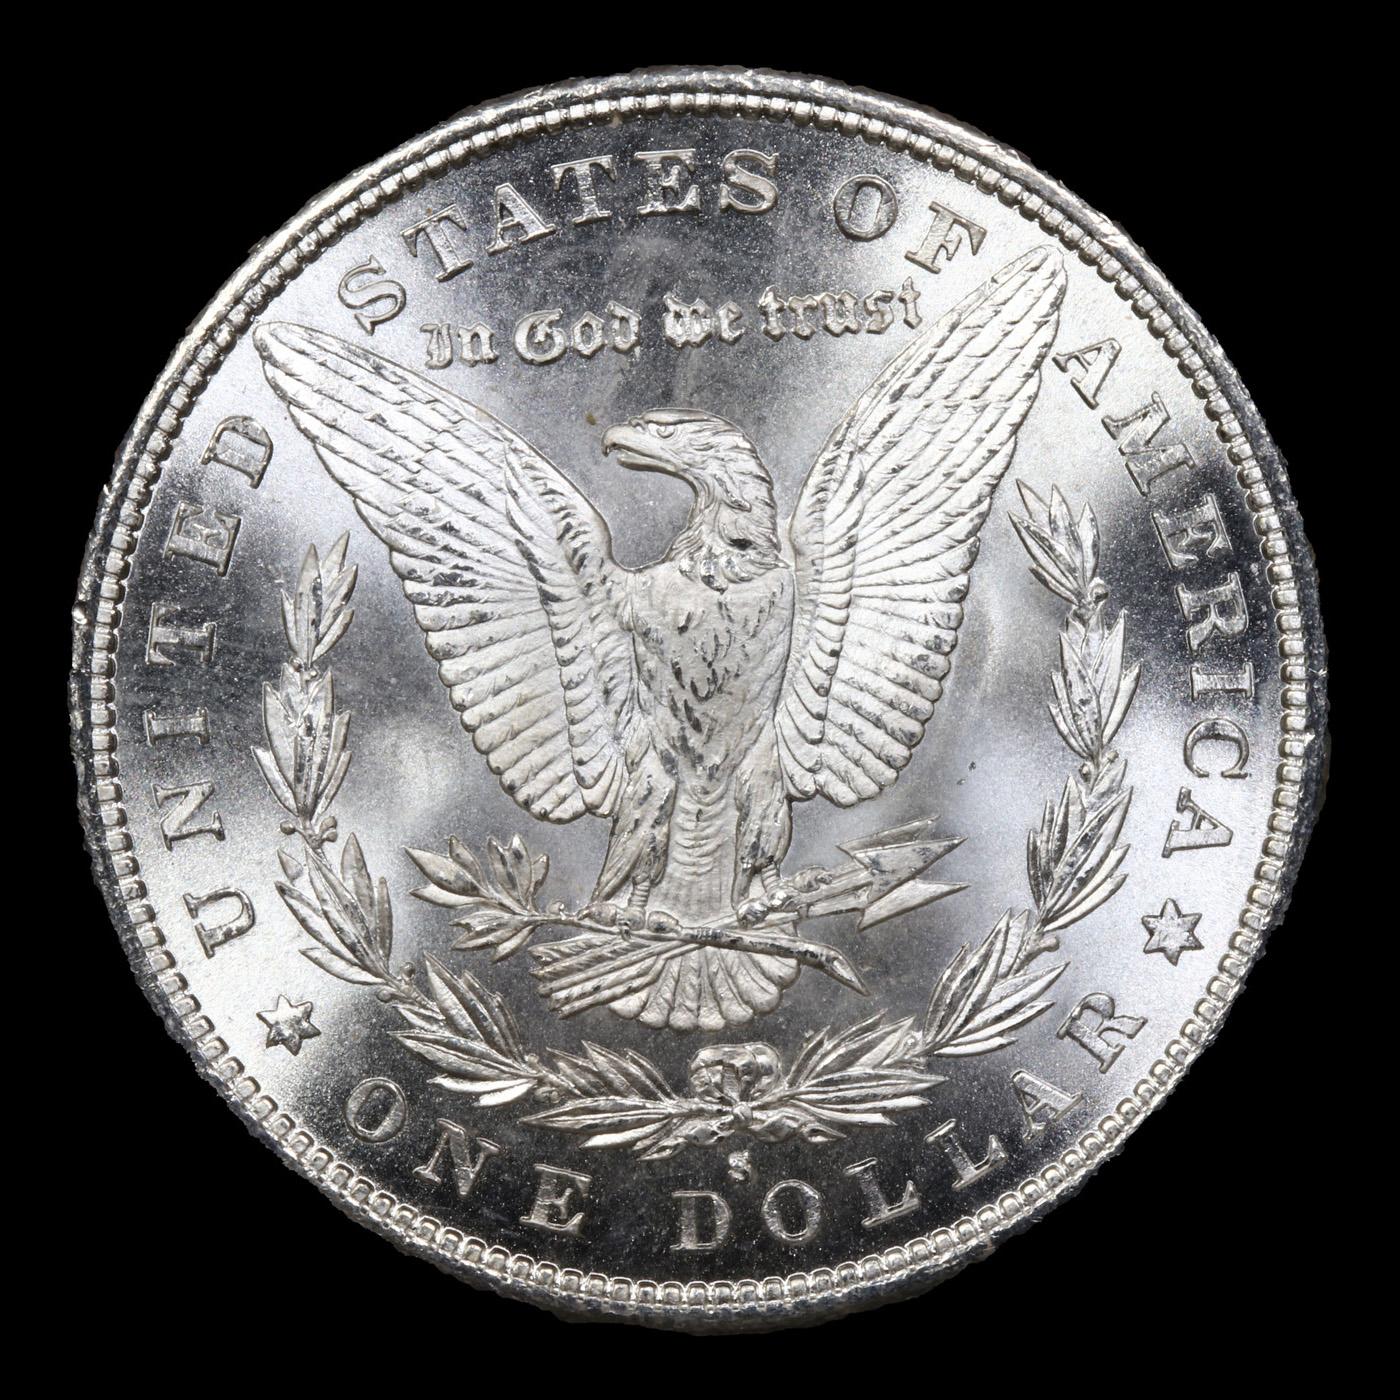 ***Auction Highlight*** 1880-s Morgan Dollar $1 Graded ms68 By SEGS (fc)